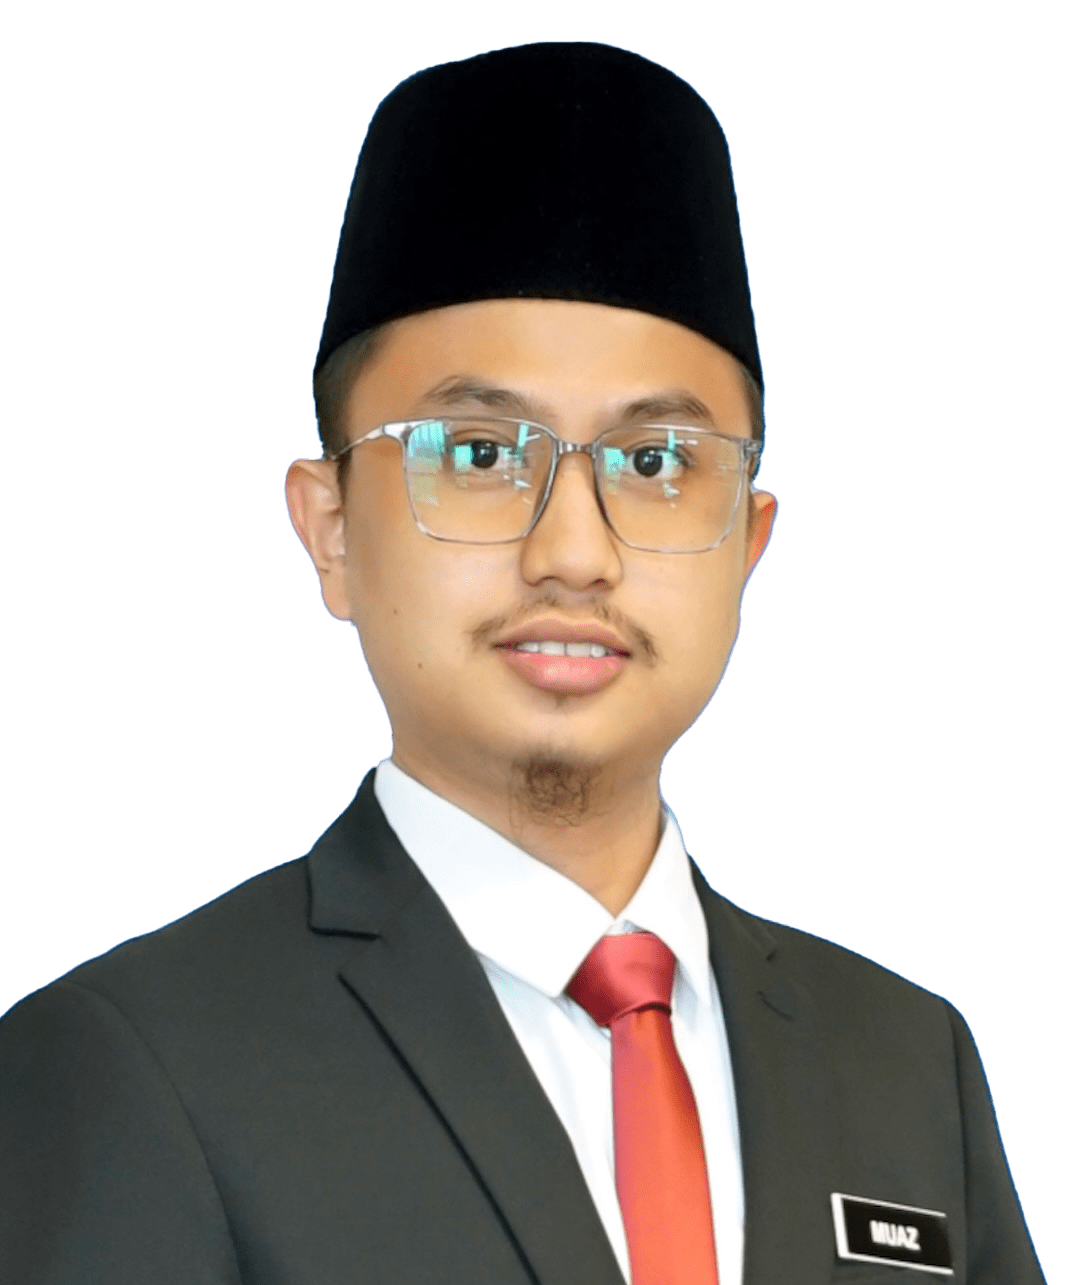 Muhammad Muazul Amin bin Mohd Adlan